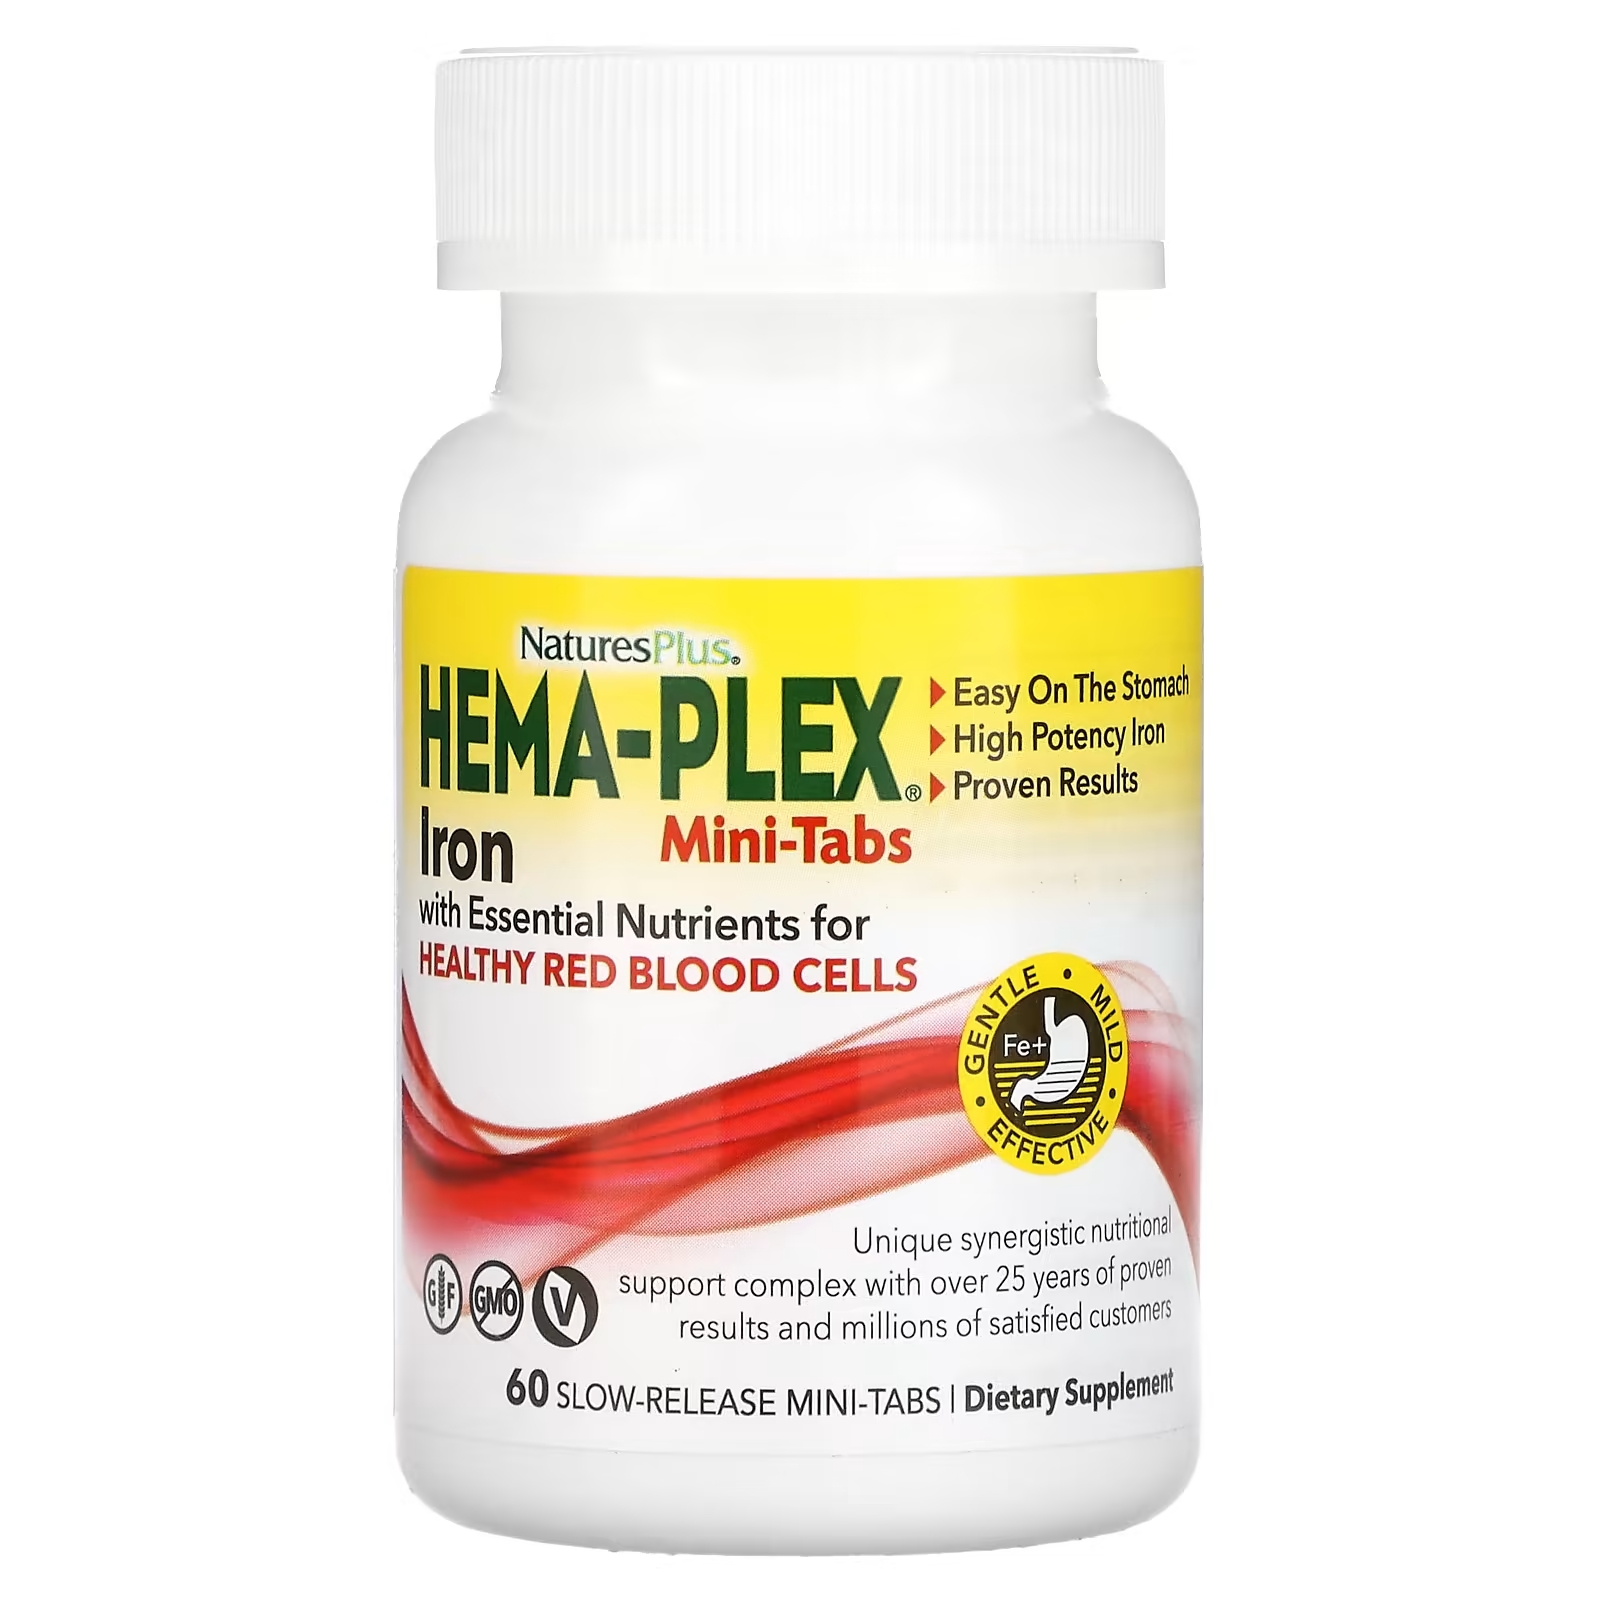 NaturesPlus Hema-Plex Iron with Essential Nutrients for Healthy Red Blood Cells, 60 таблеток hema plex быстрого действия naturesplus 60 мягких таблеток